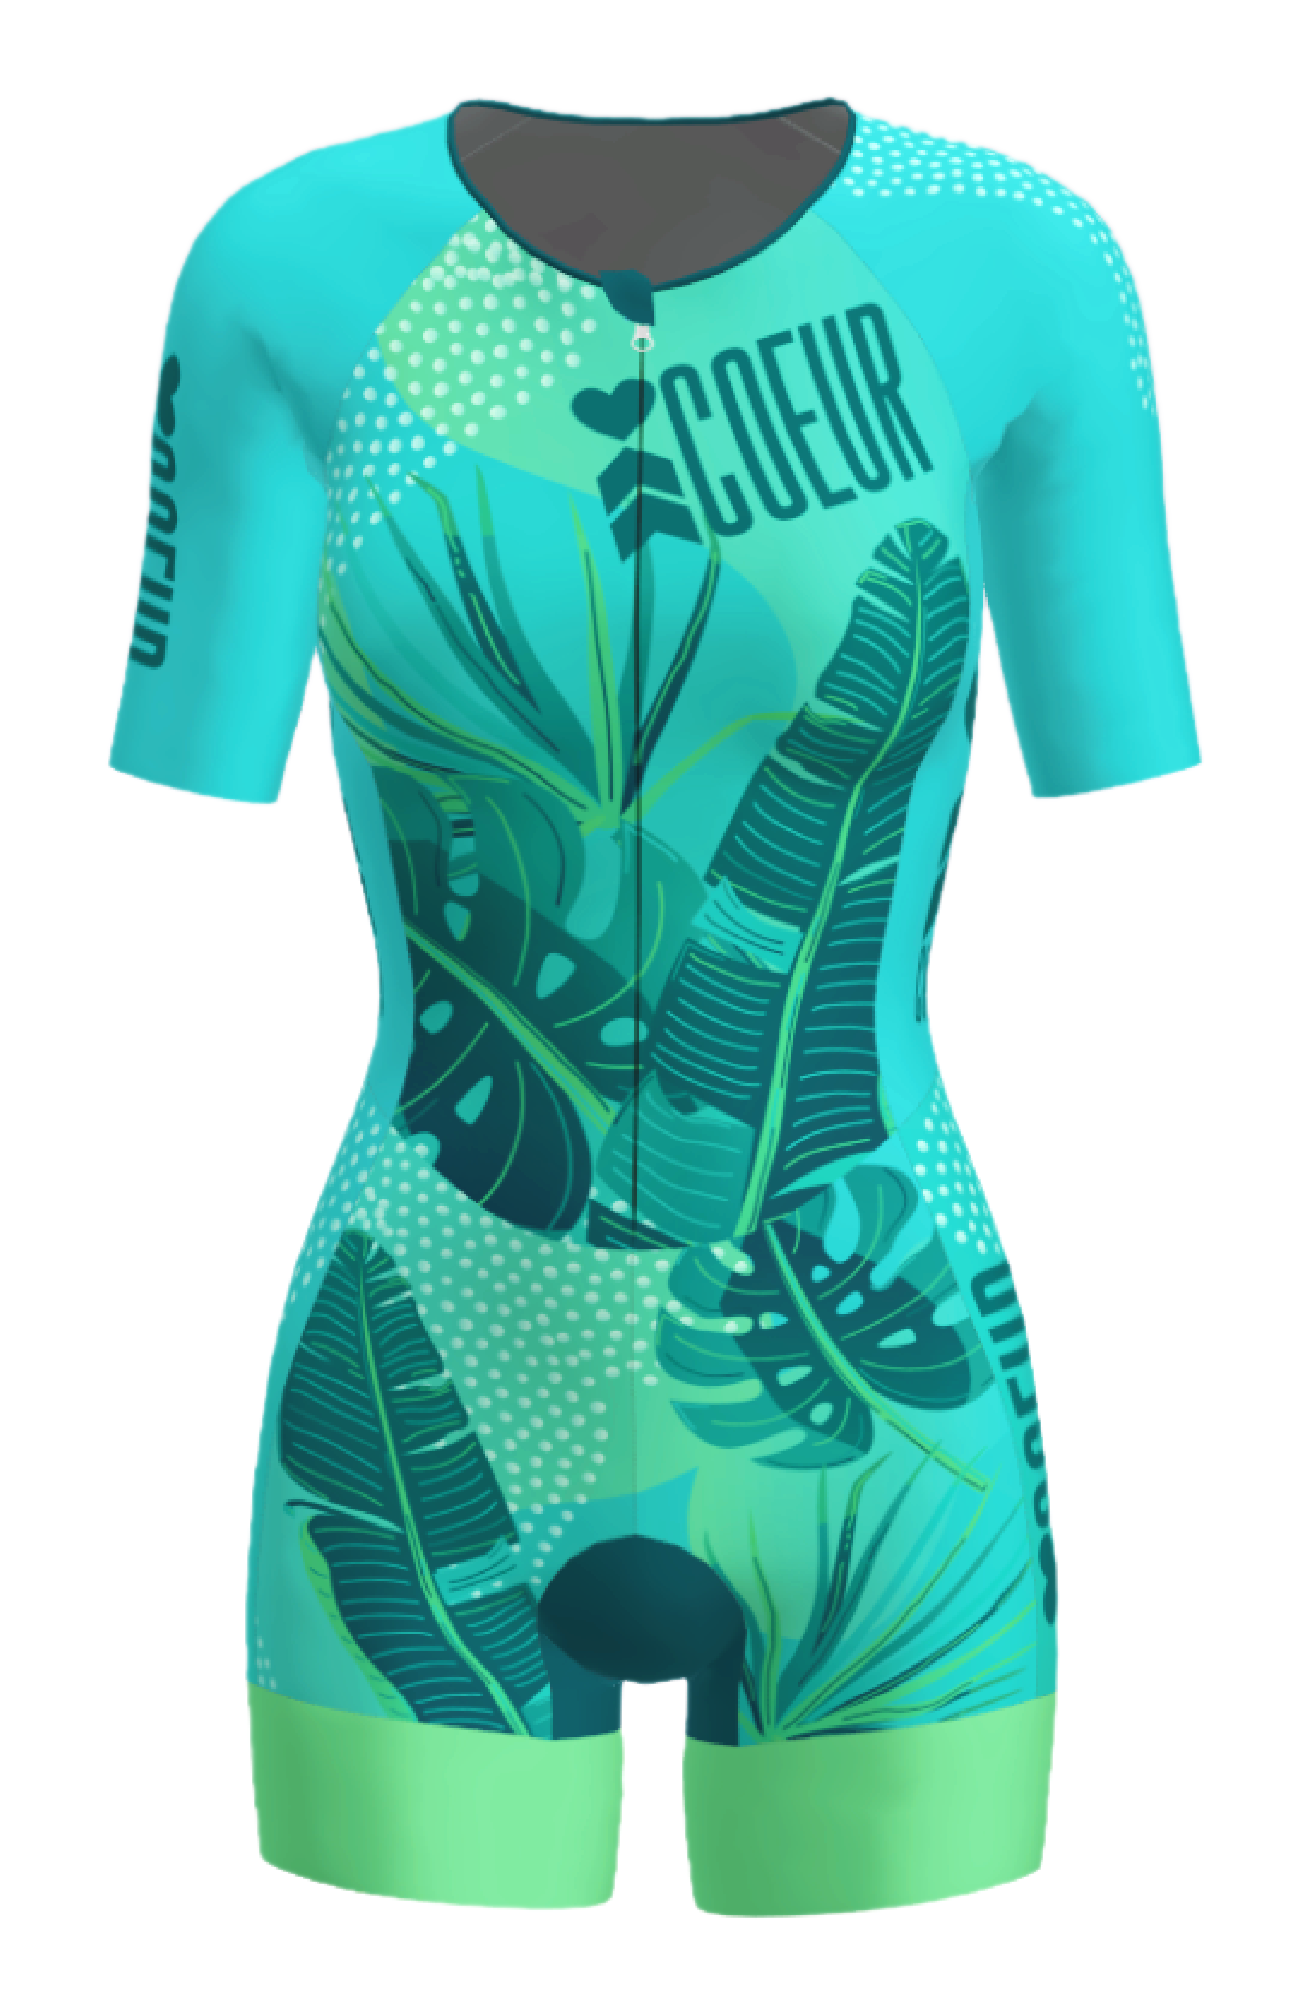 Coeur Sports Sleeved Tri Suit PRESALE! Aloha 23 Women's Sleeved One Piece Triathlon Suit